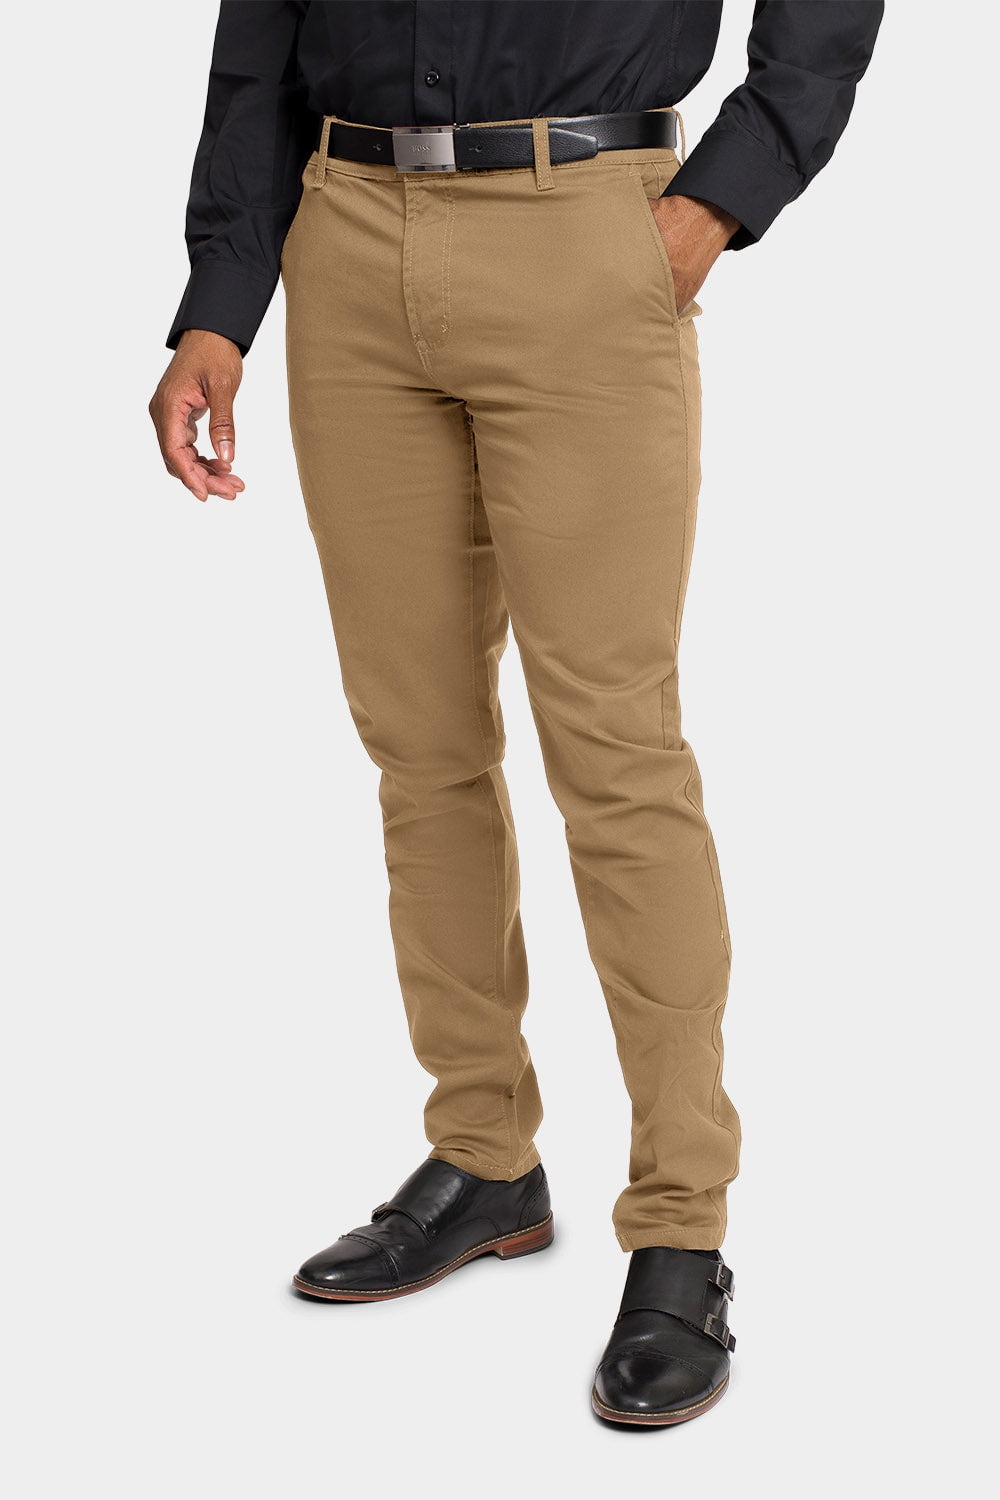 George Men's Premium Straight Fit Khaki Pants 